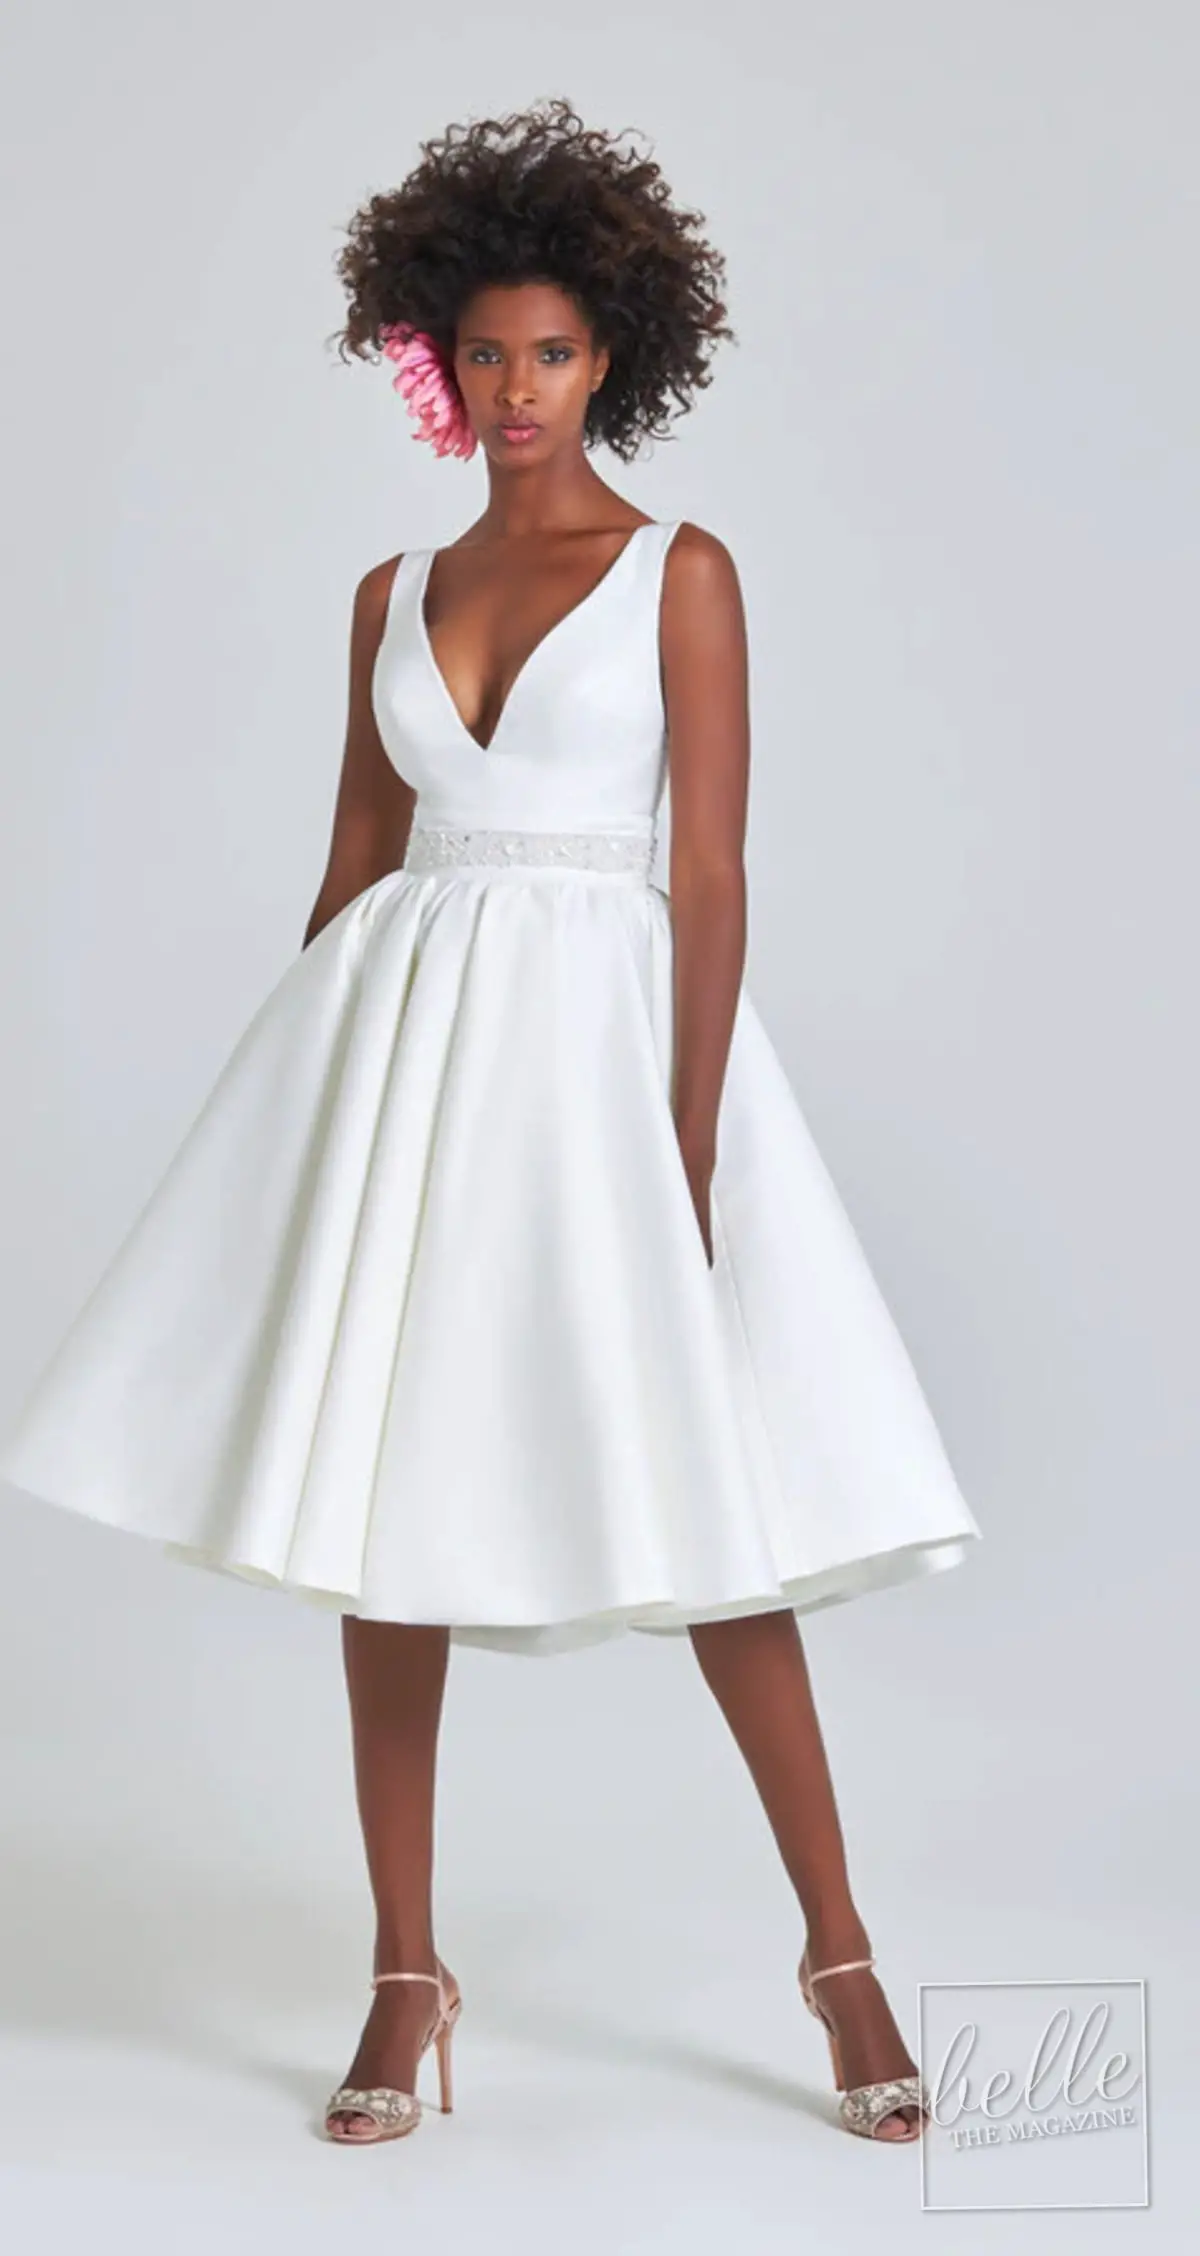 Wedding dress trends 2021 - Mini dresses and separates - KOSIBAH